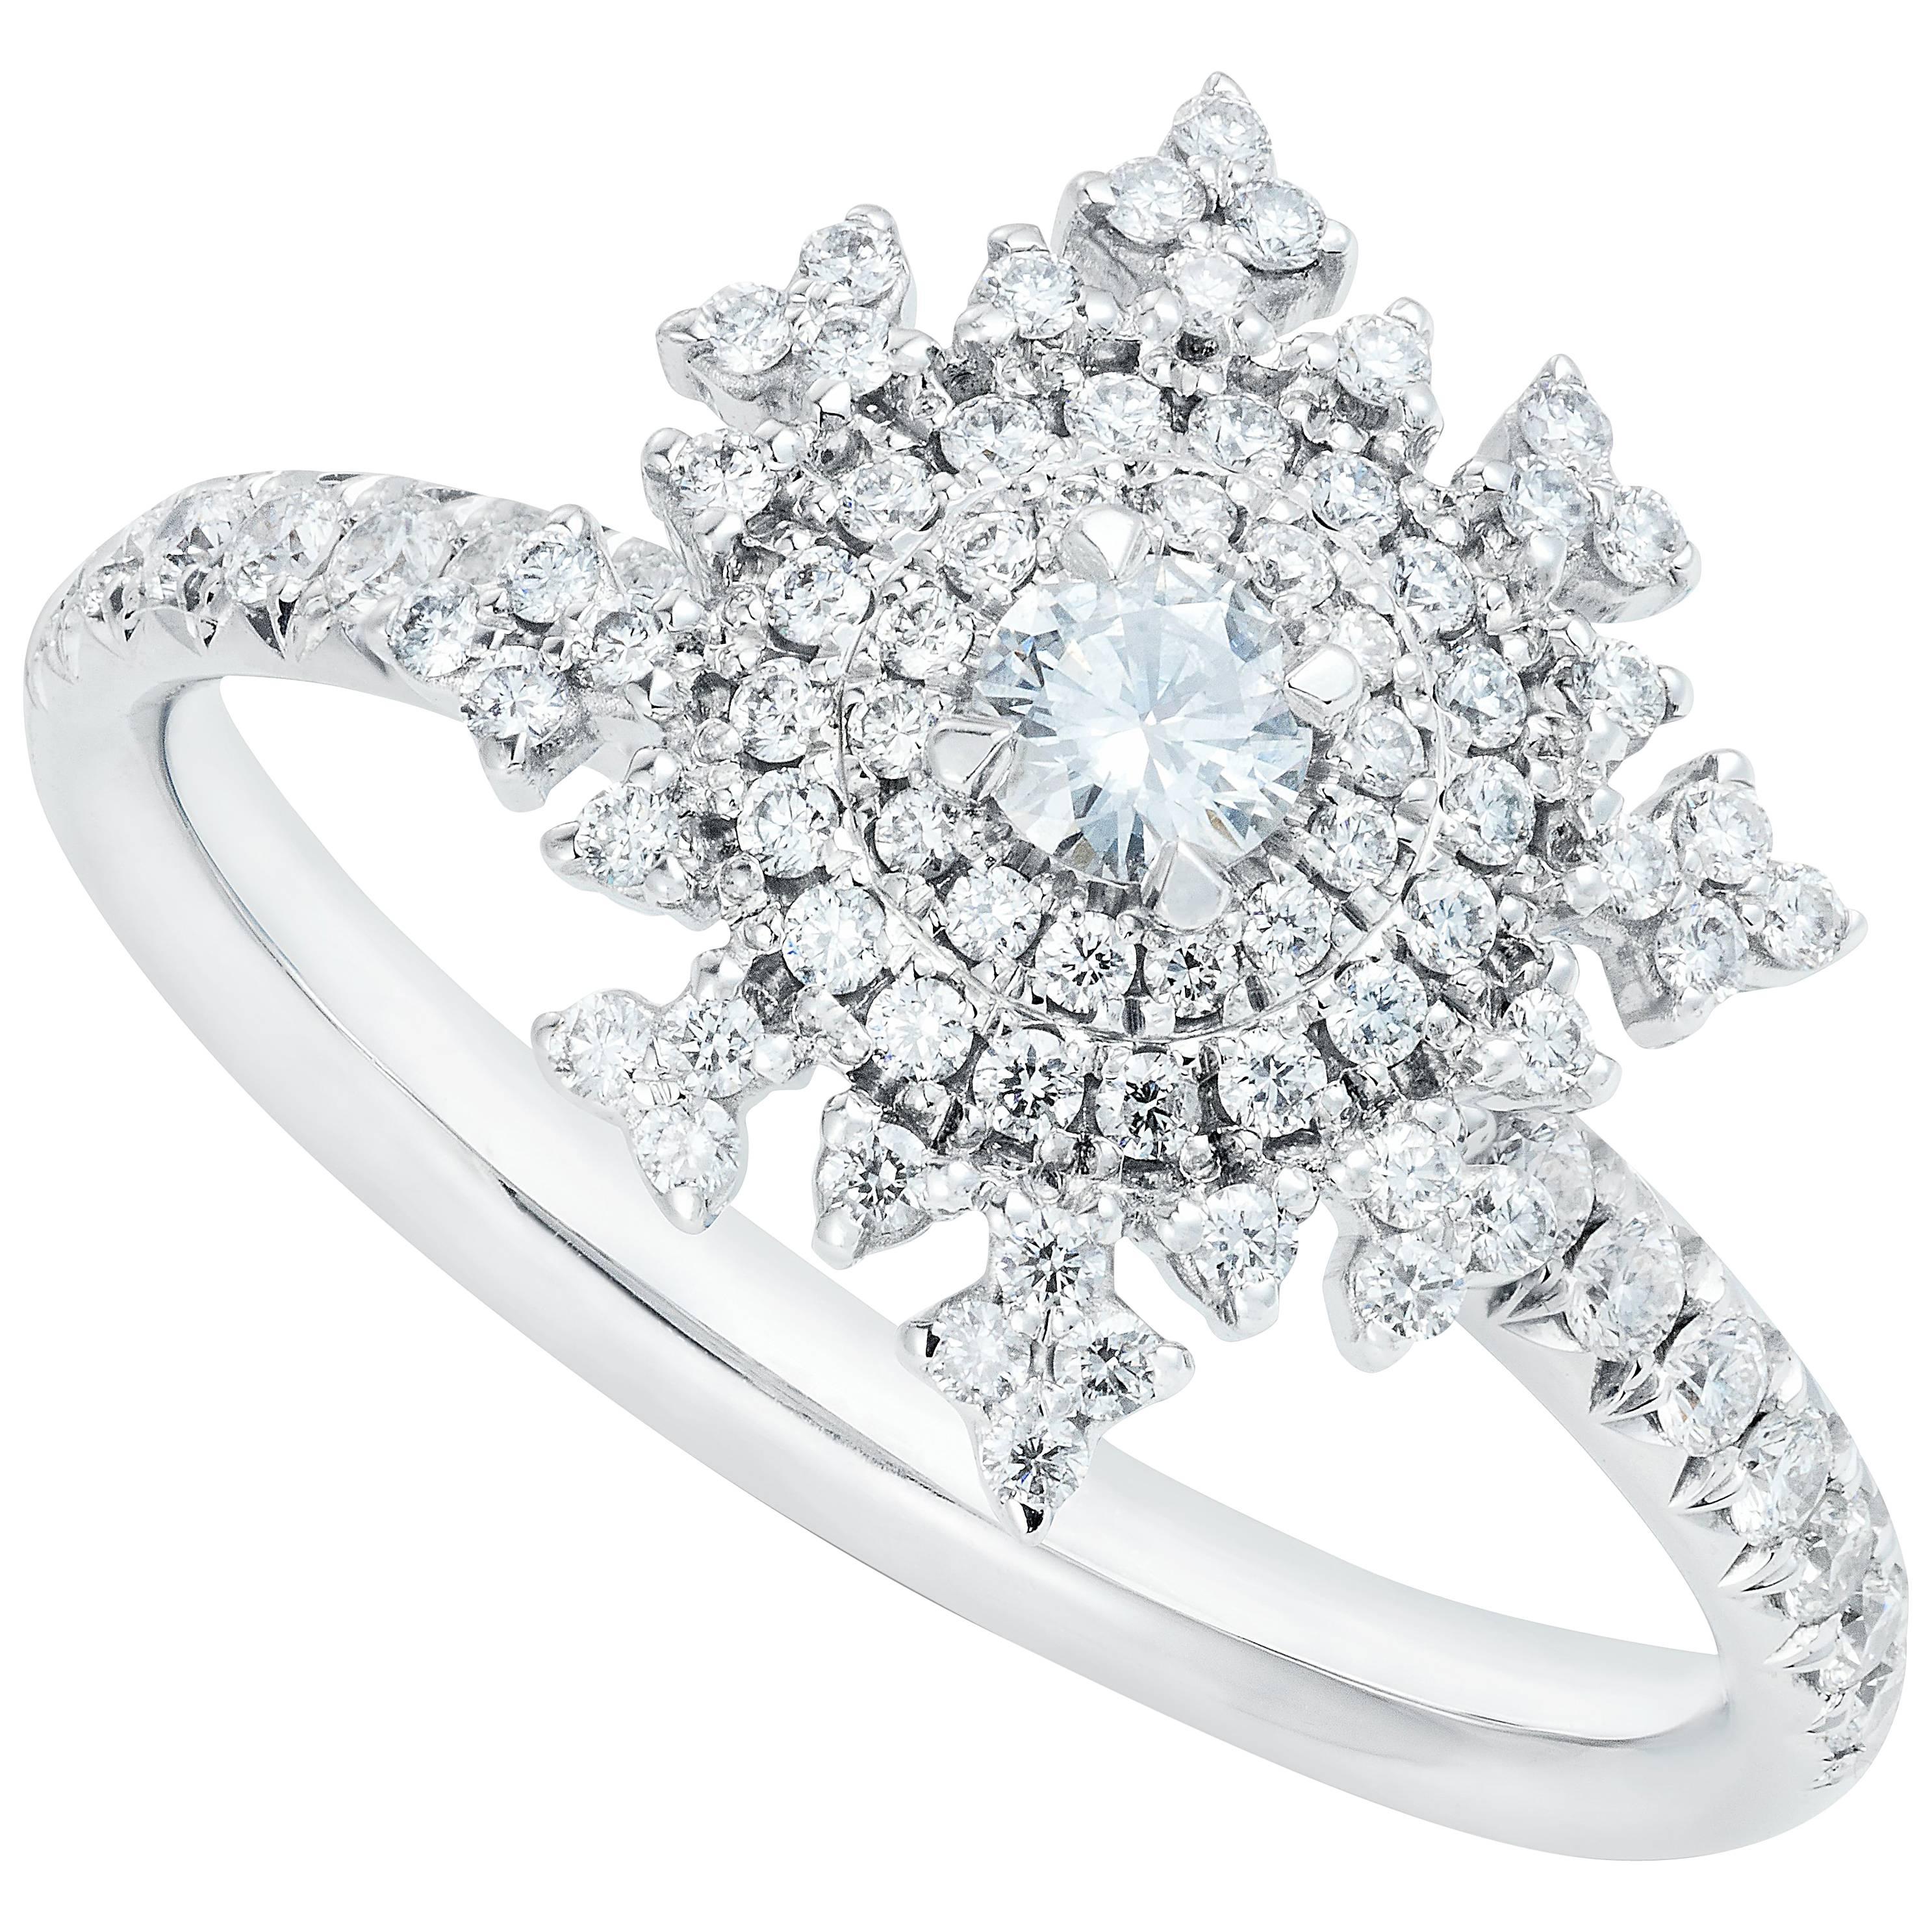 Nadine Aysoy Petite Tsarina 18 Karat White Gold and Diamond Engagement Ring For Sale